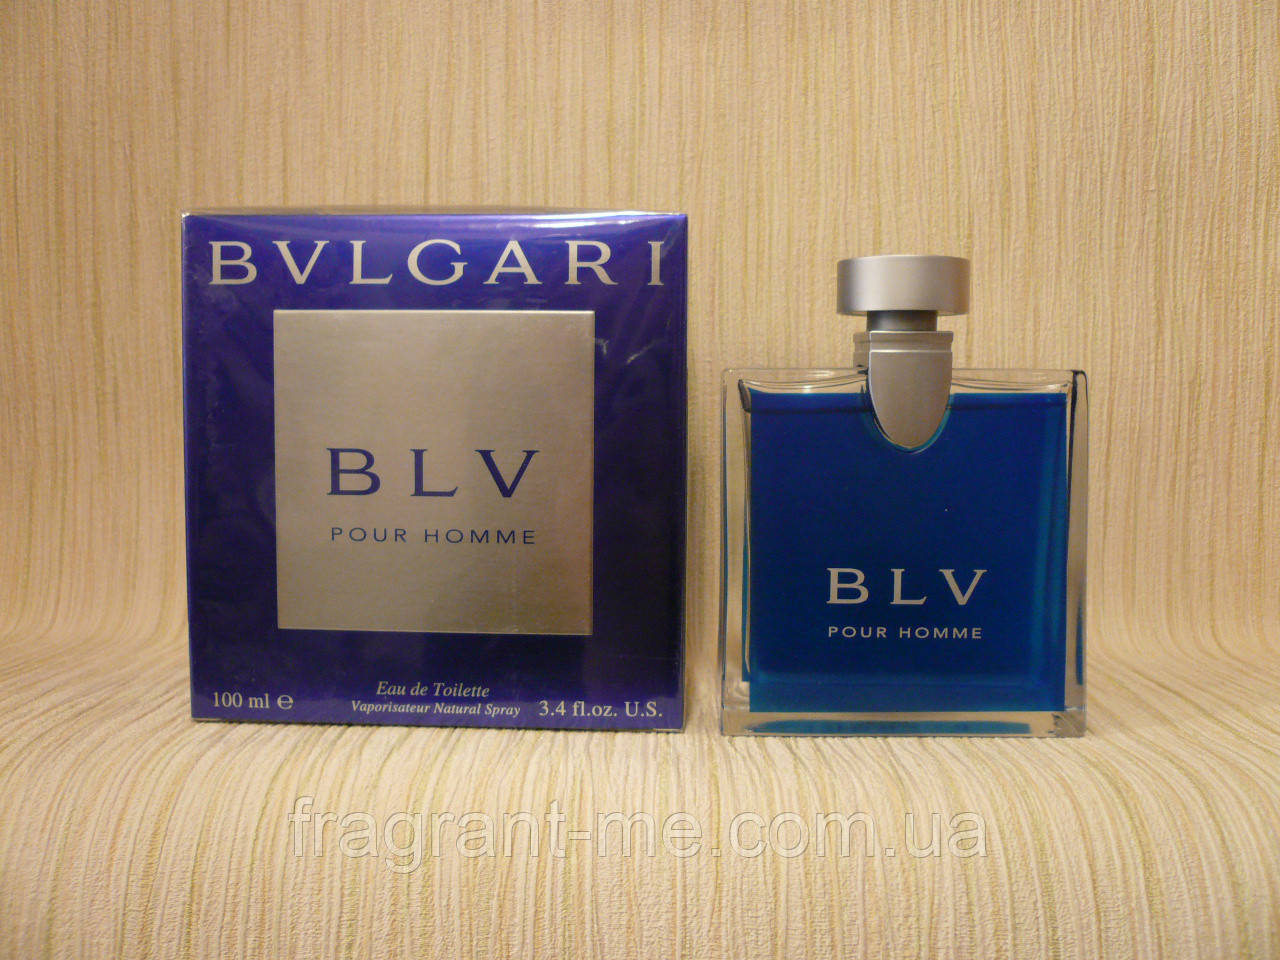 Bvlgari-BLV Pour Homme (2001) Туалетна вода 100 мл (тестер) — Вінтаж перший випуск, формула аромату 2001 року